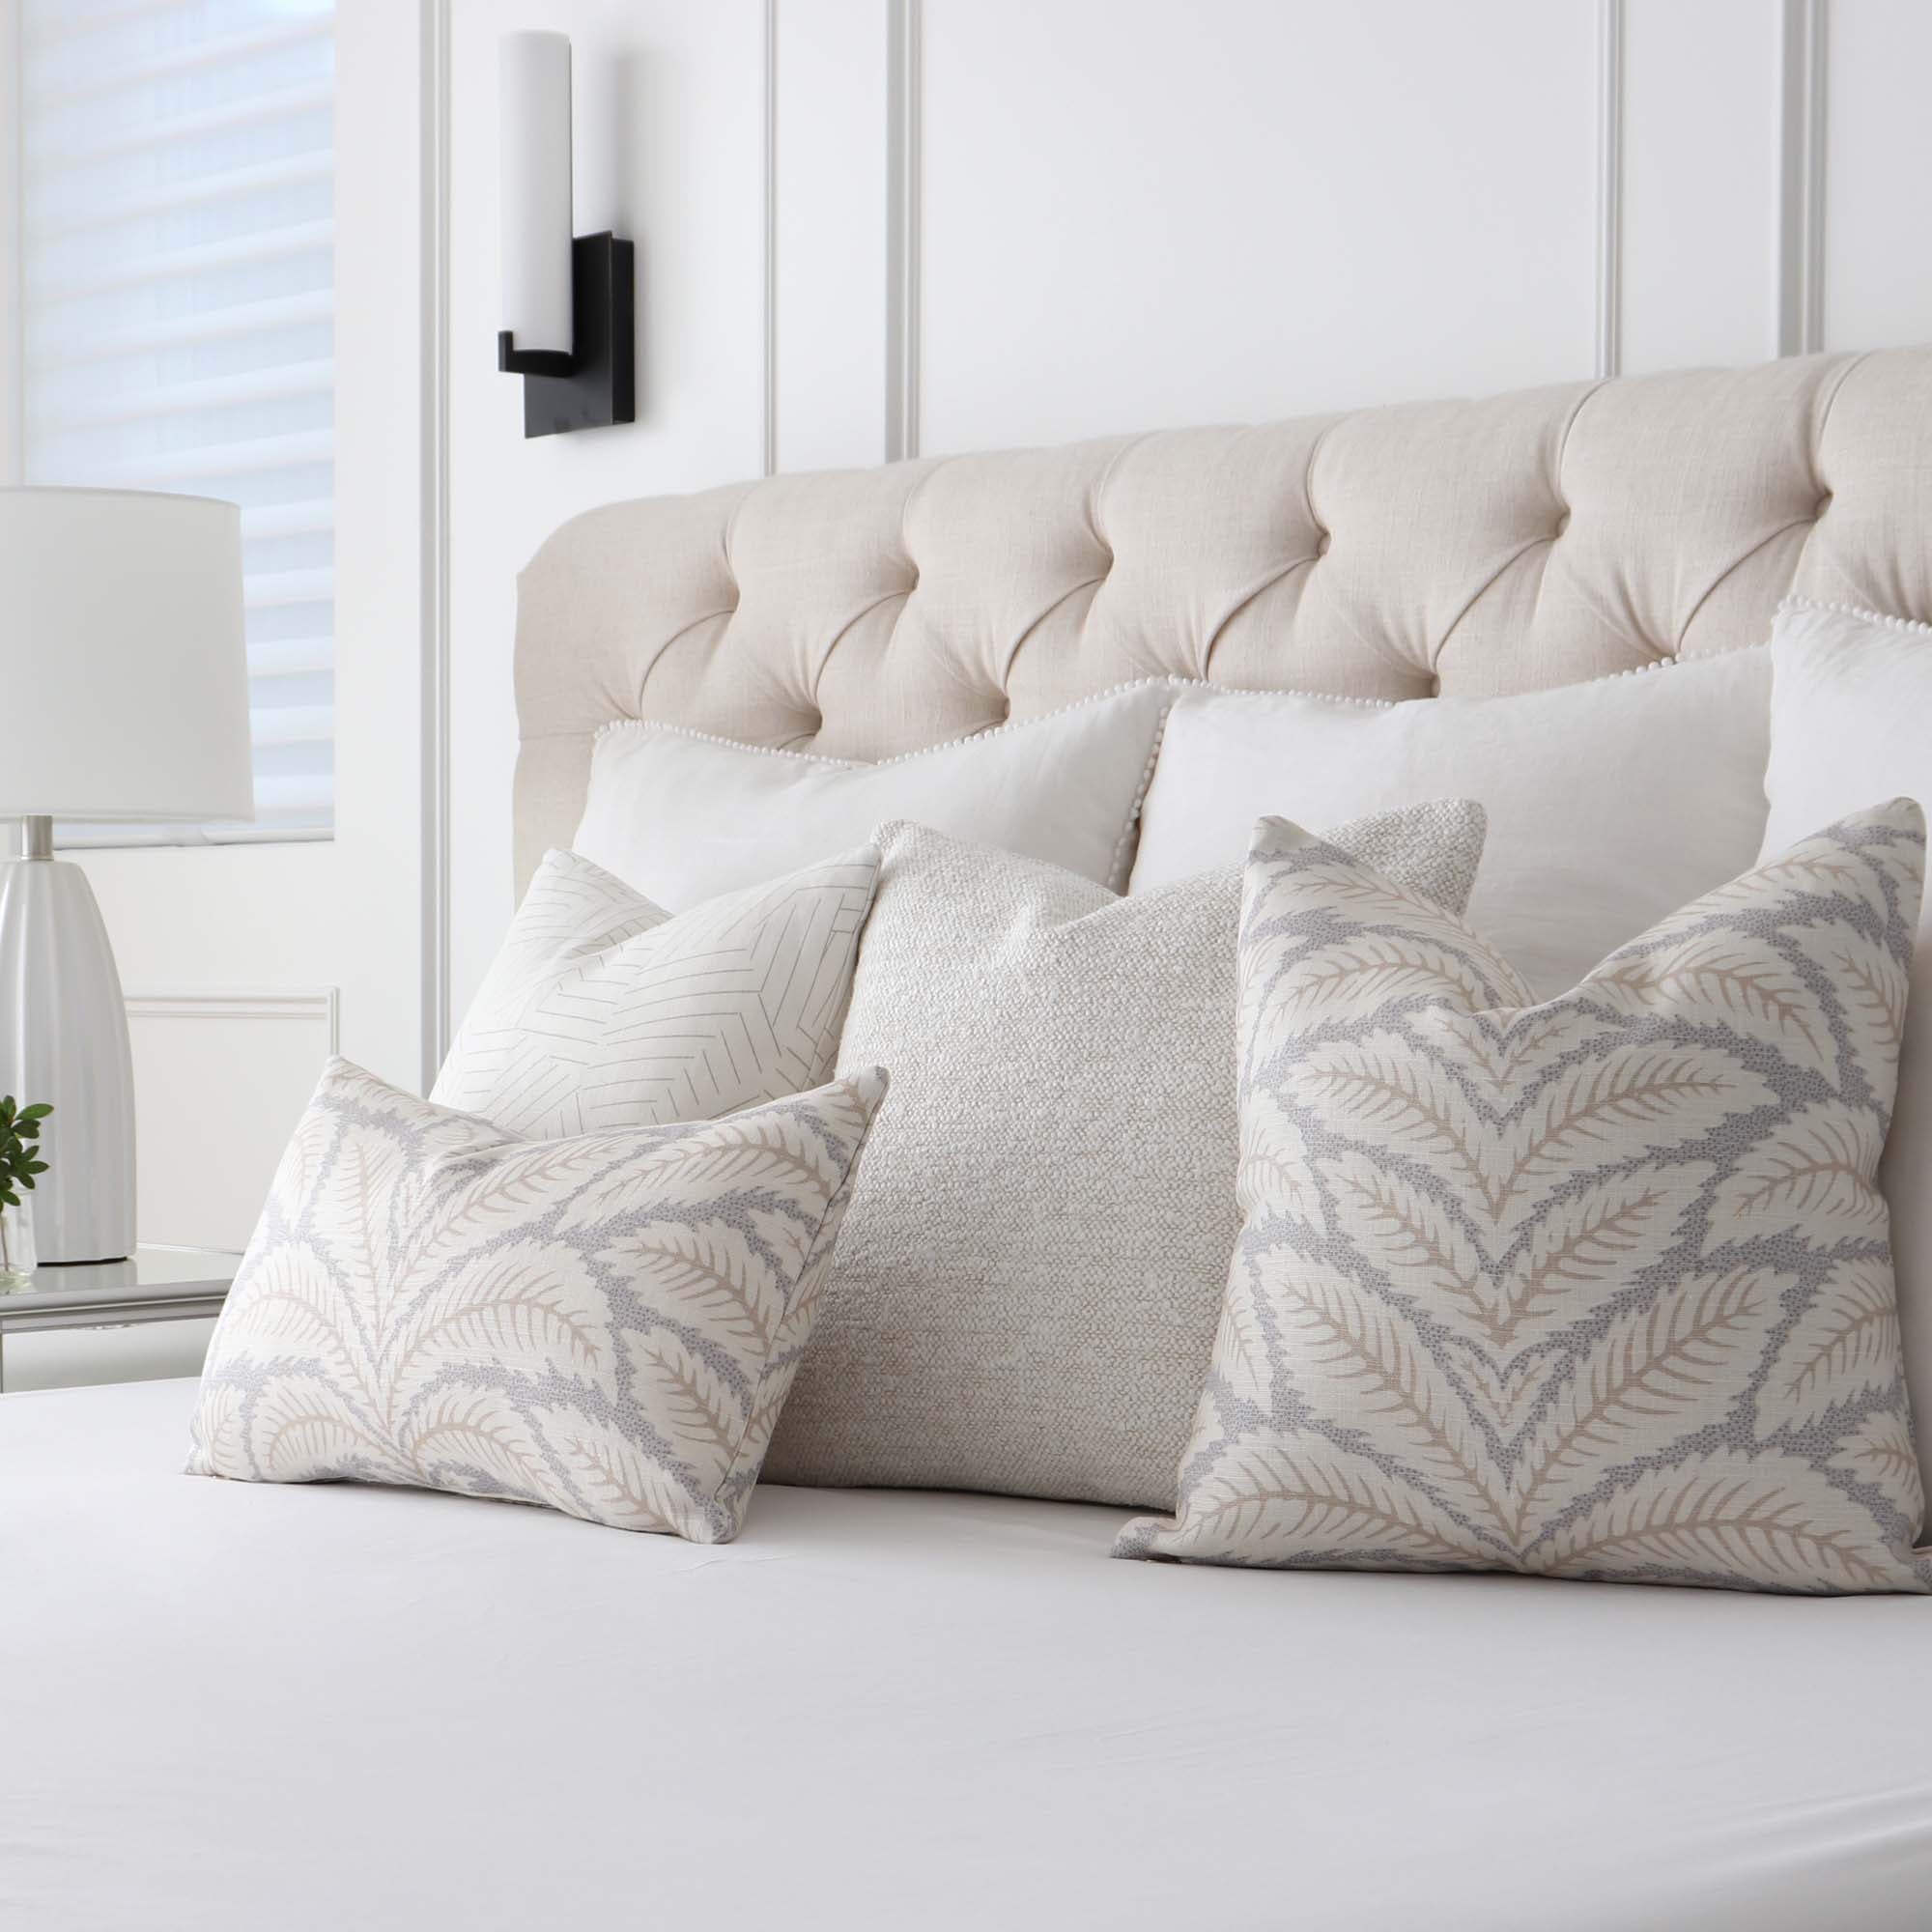 Brunschwig Fils Talavera Linen Birch Palm Designer Luxury Decorative Throw Pillow Cover in Bedroom with Matching Pillows